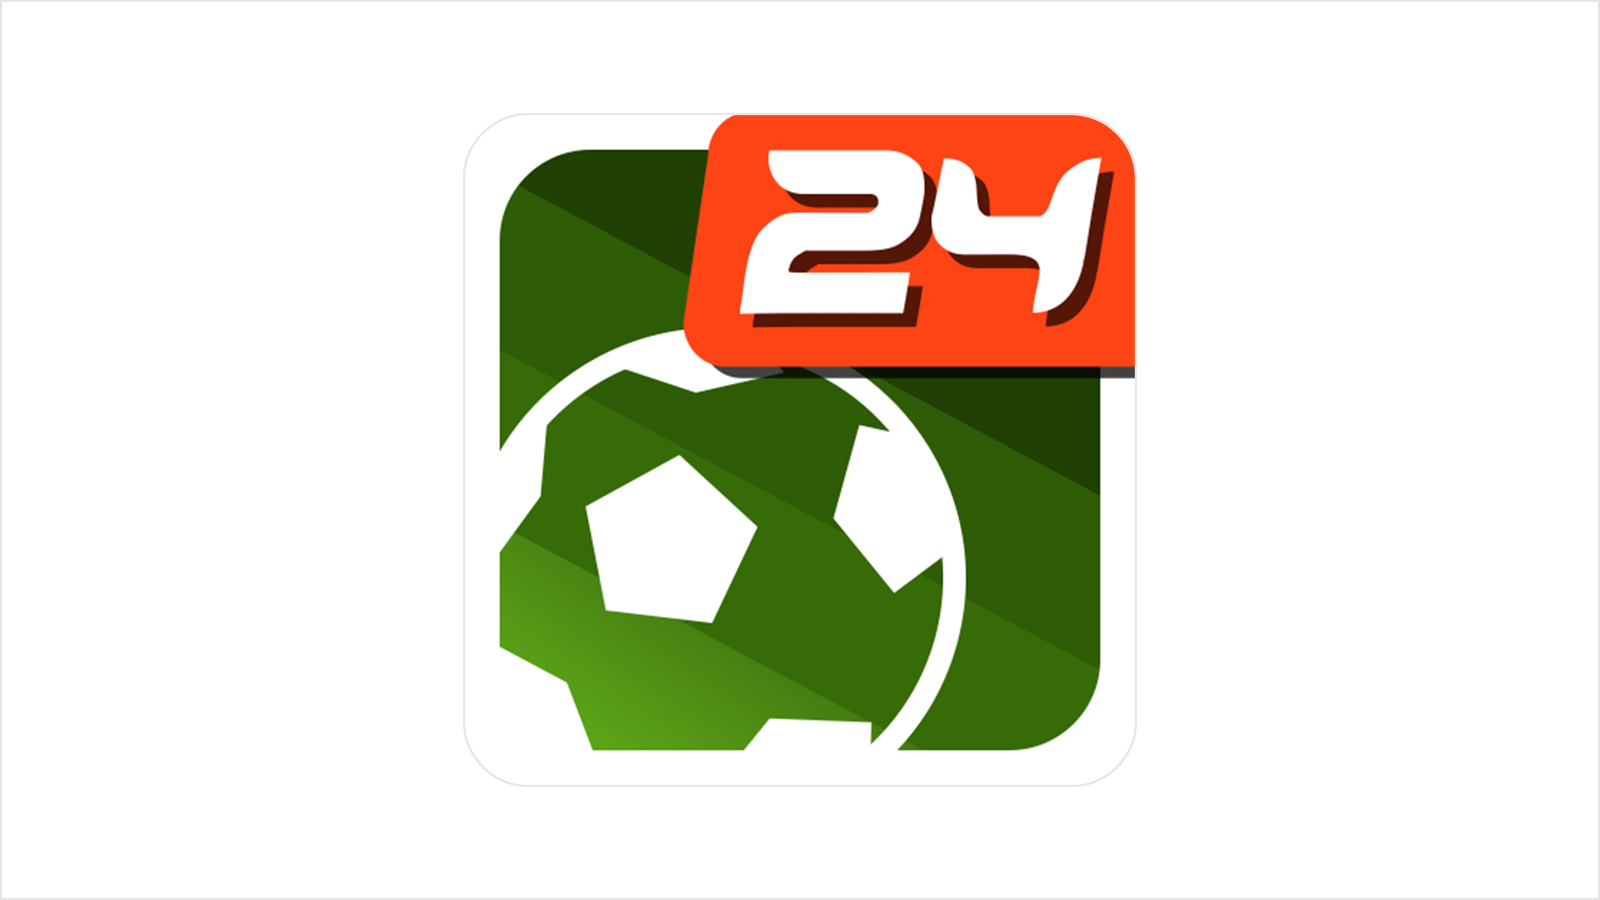 Télécharger Futbol24 - football en direct (gratuit) Android, iOS